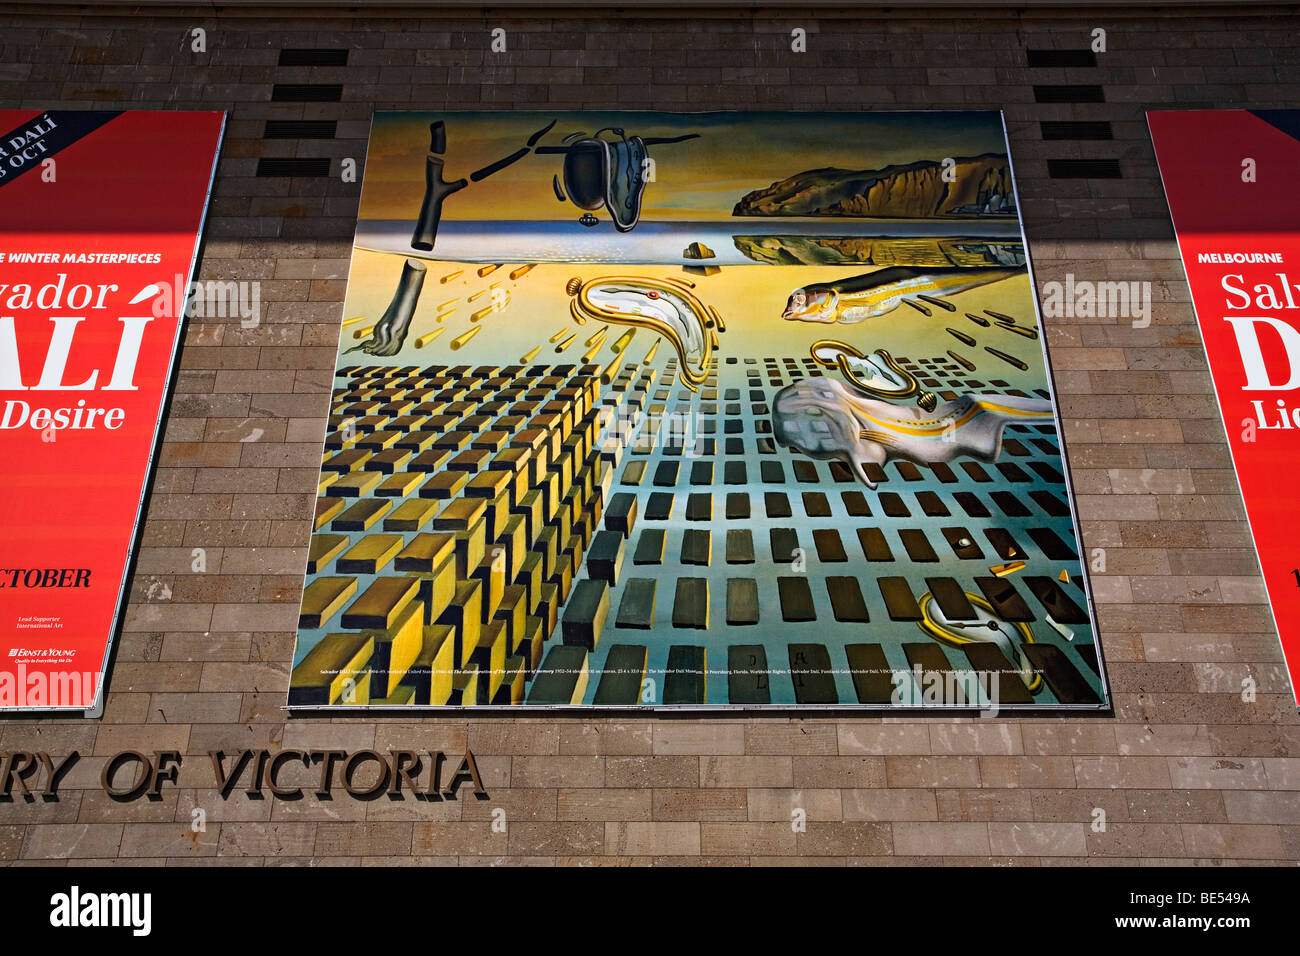 Melbourne Attractions / The National Gallery of Victoria in Melbourne Victoria Australia. Stock Photo